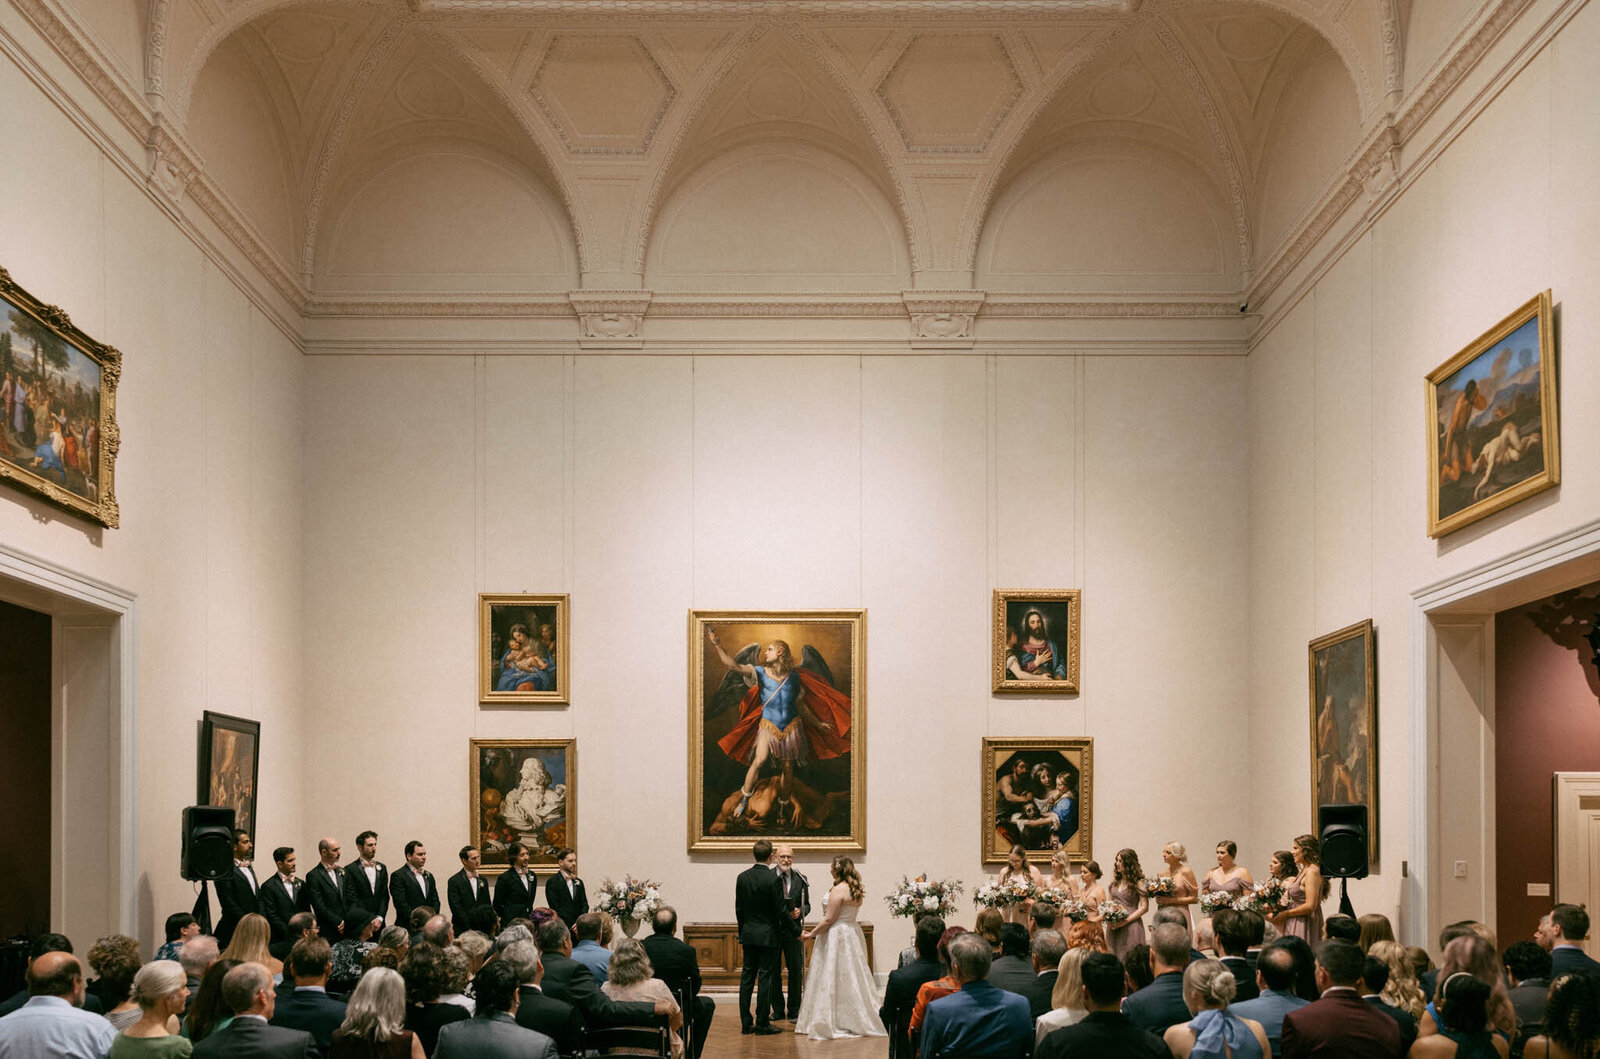 Minneapolis Institute of Art wedding photographer ceremony in the gallery